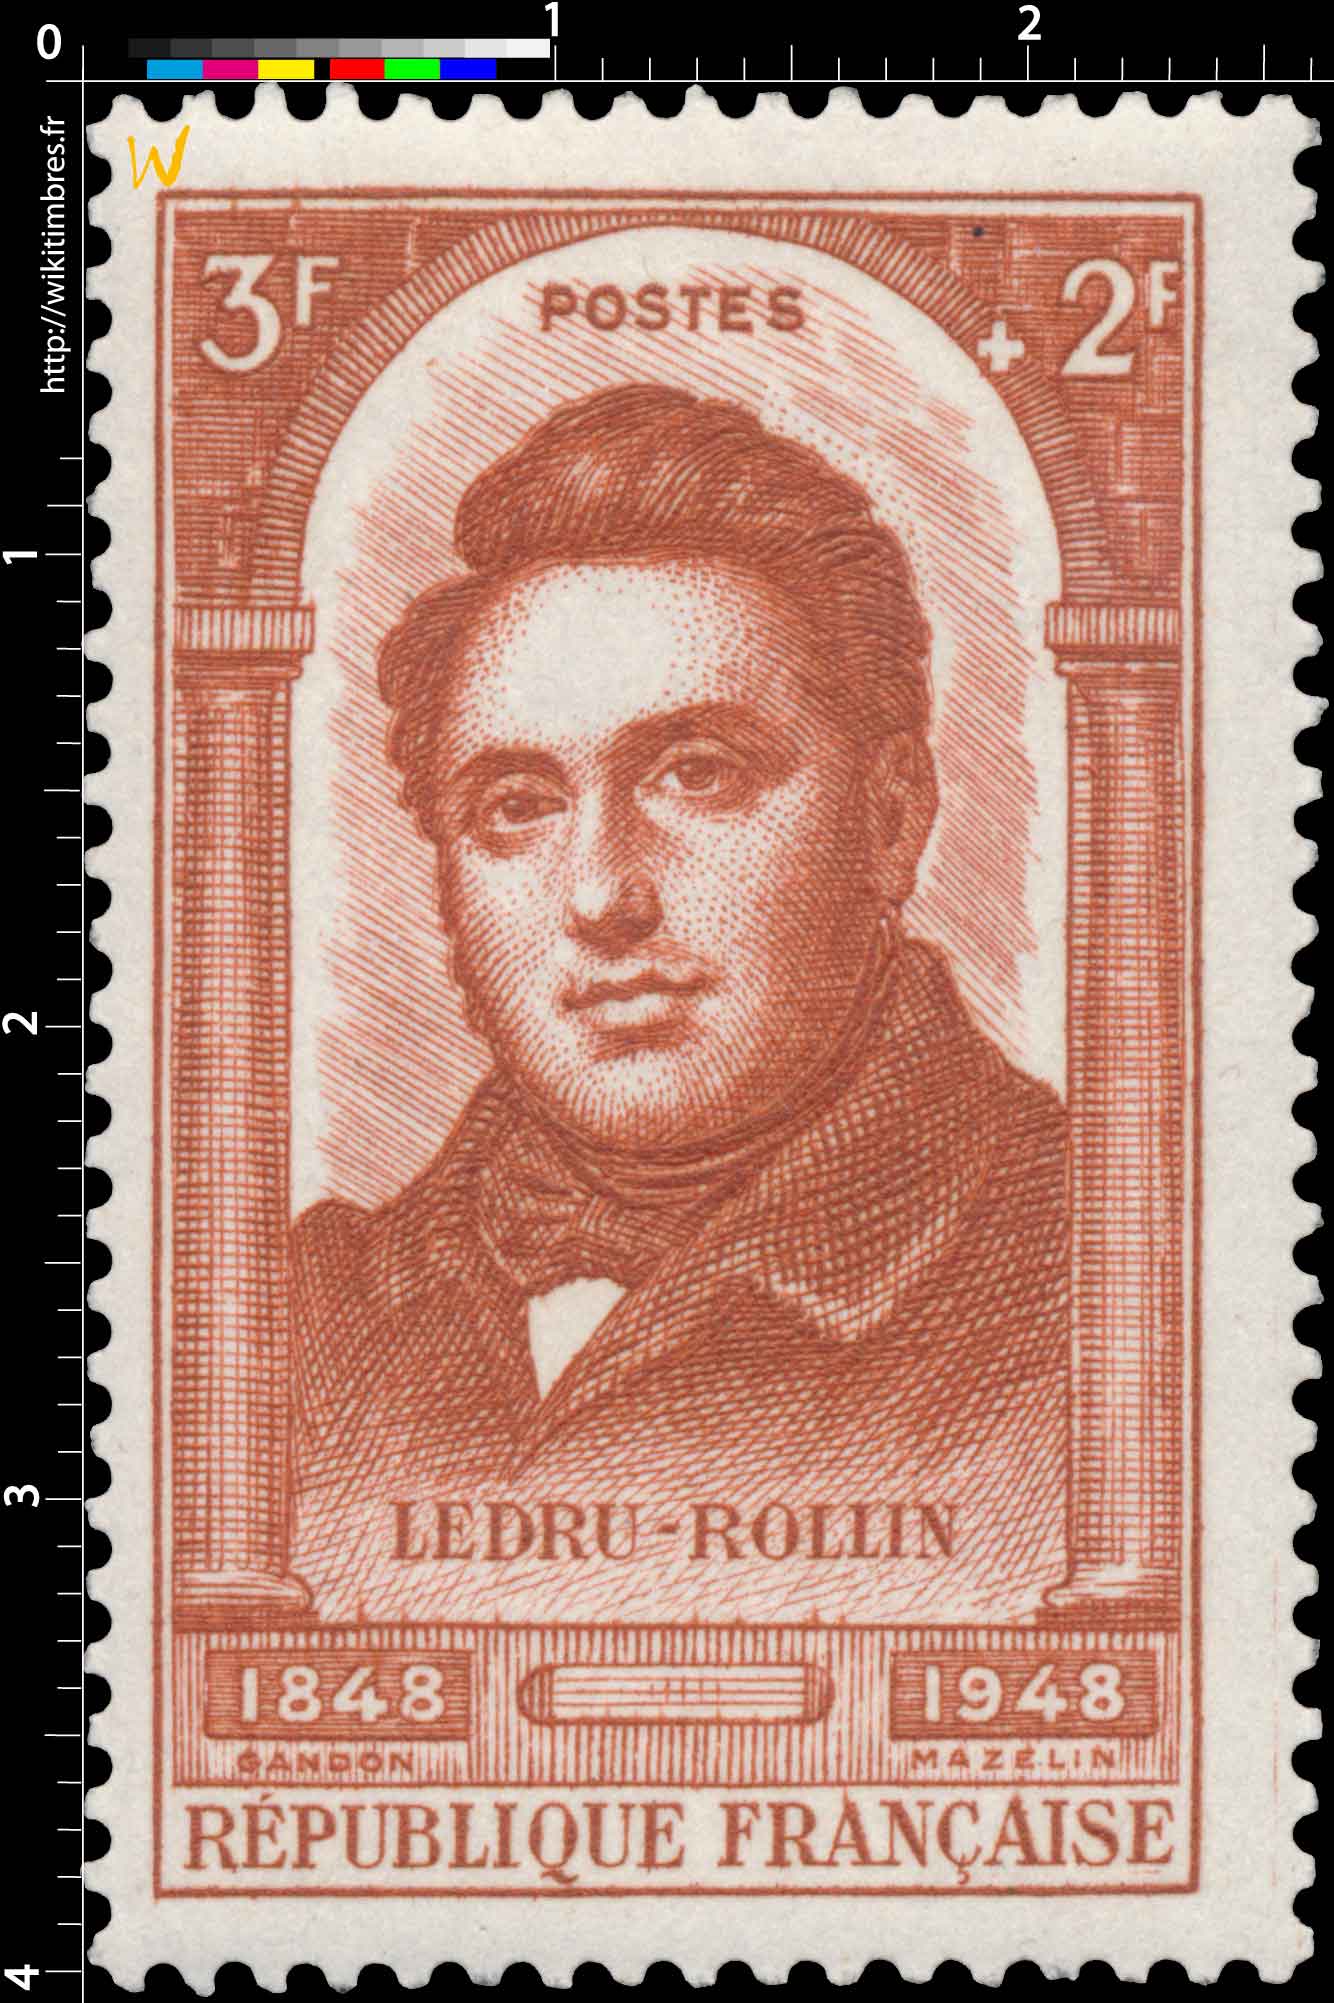 LEDRU-ROLLIN 1848-1948